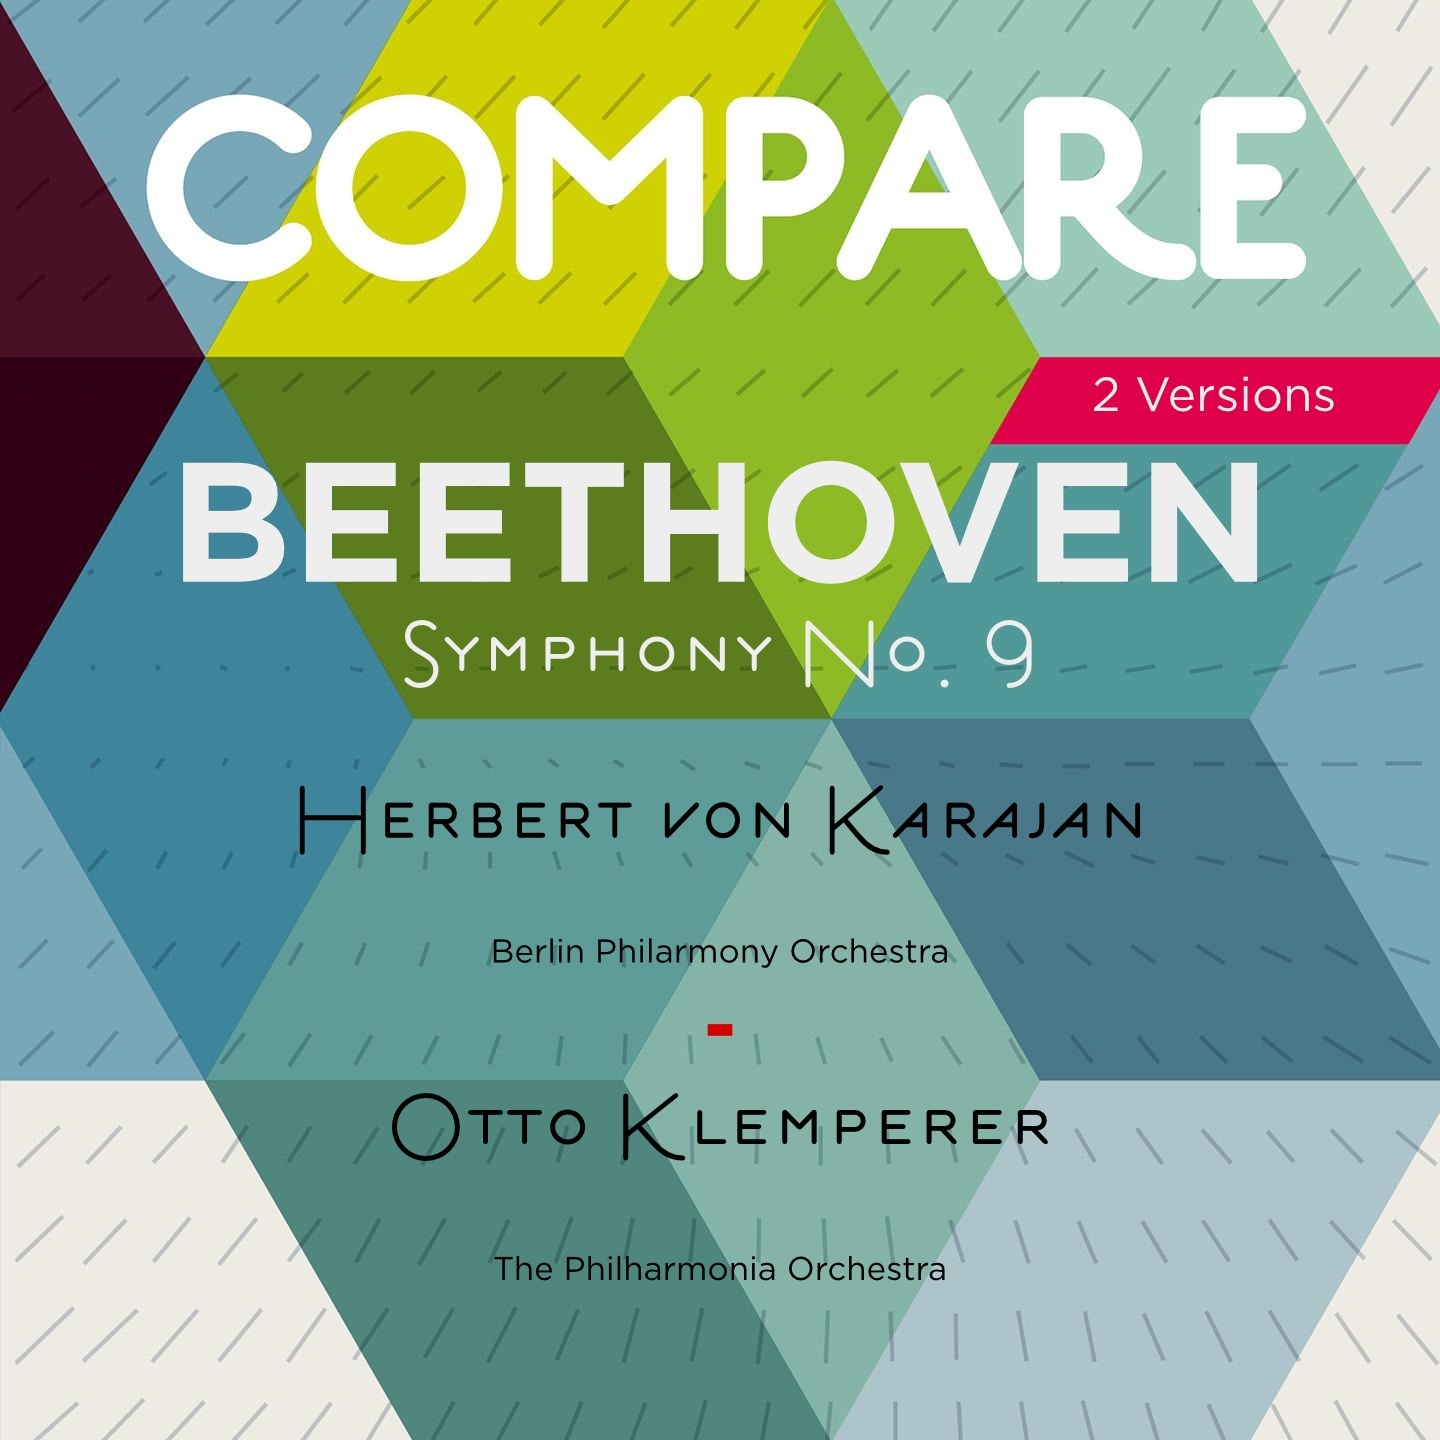 Beethoven: Symphonie No. 9, Von Karajan vs. Klemperer (Compare 2 Versions)